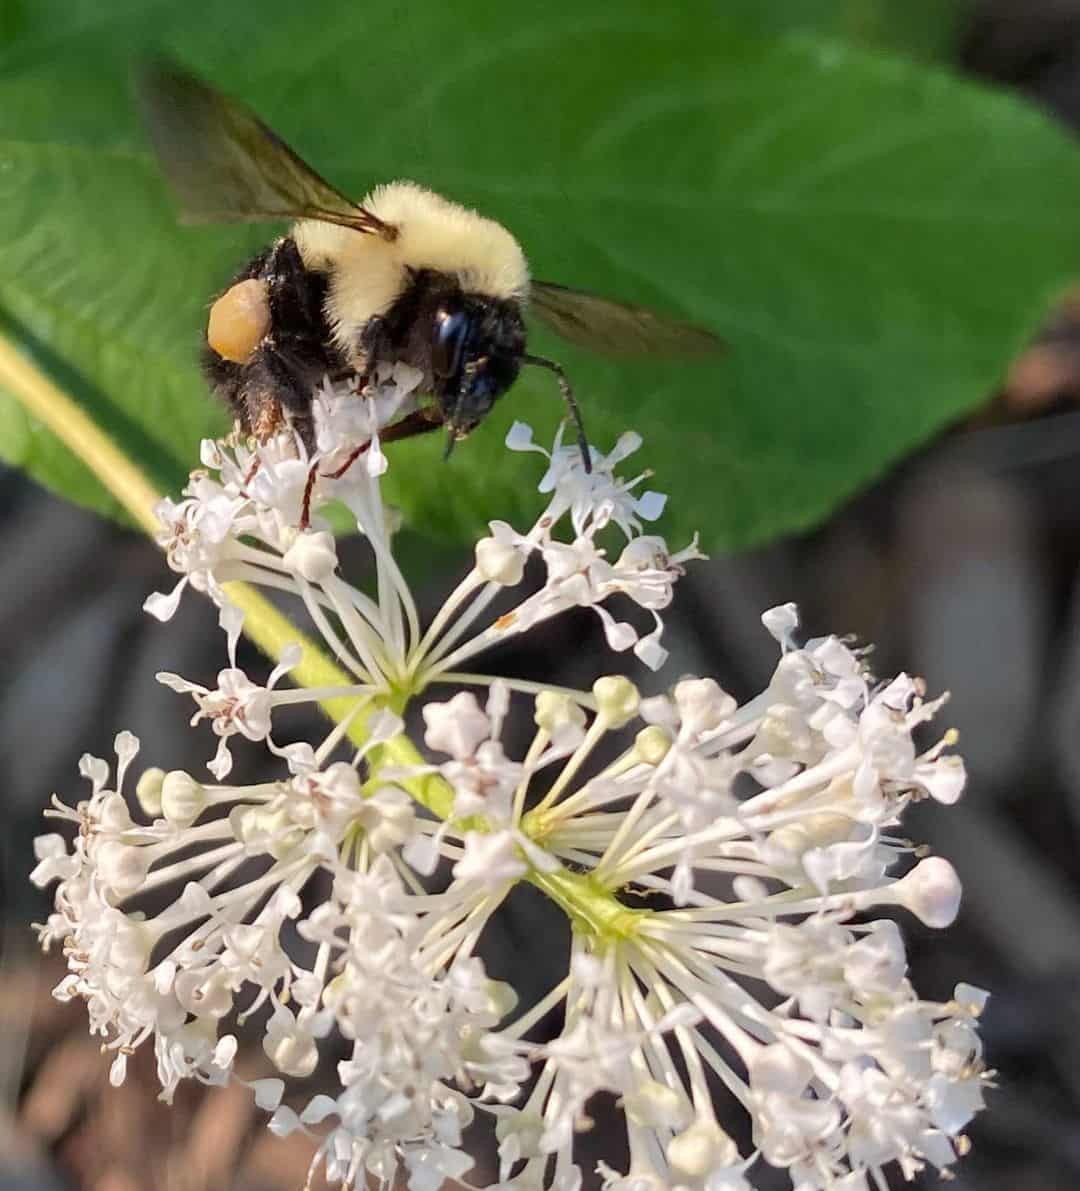 Bees and Wasps